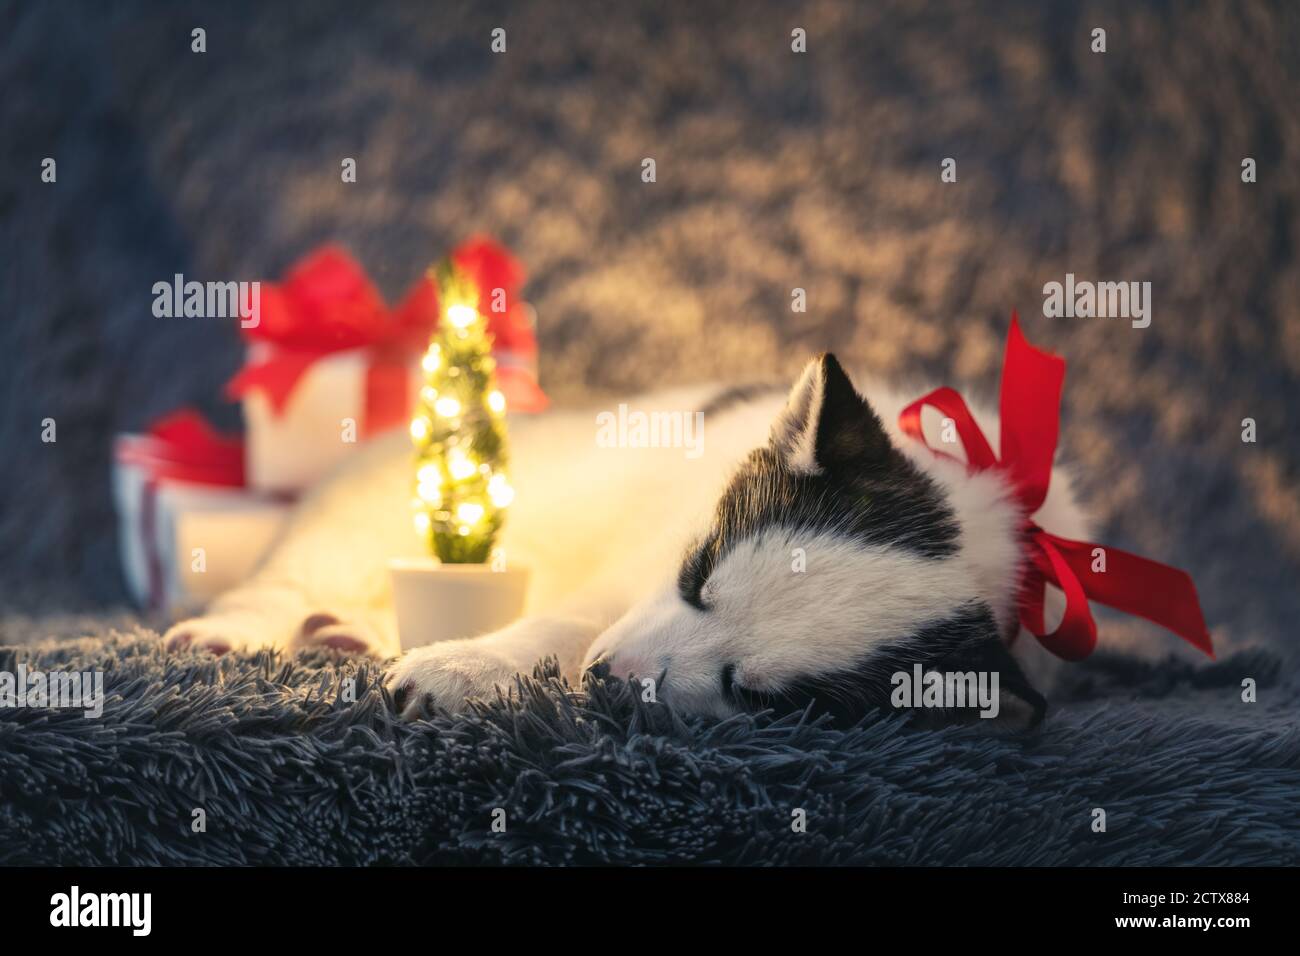 3D Effect Husky Big Dog perfect Christmas or Birthsday present 